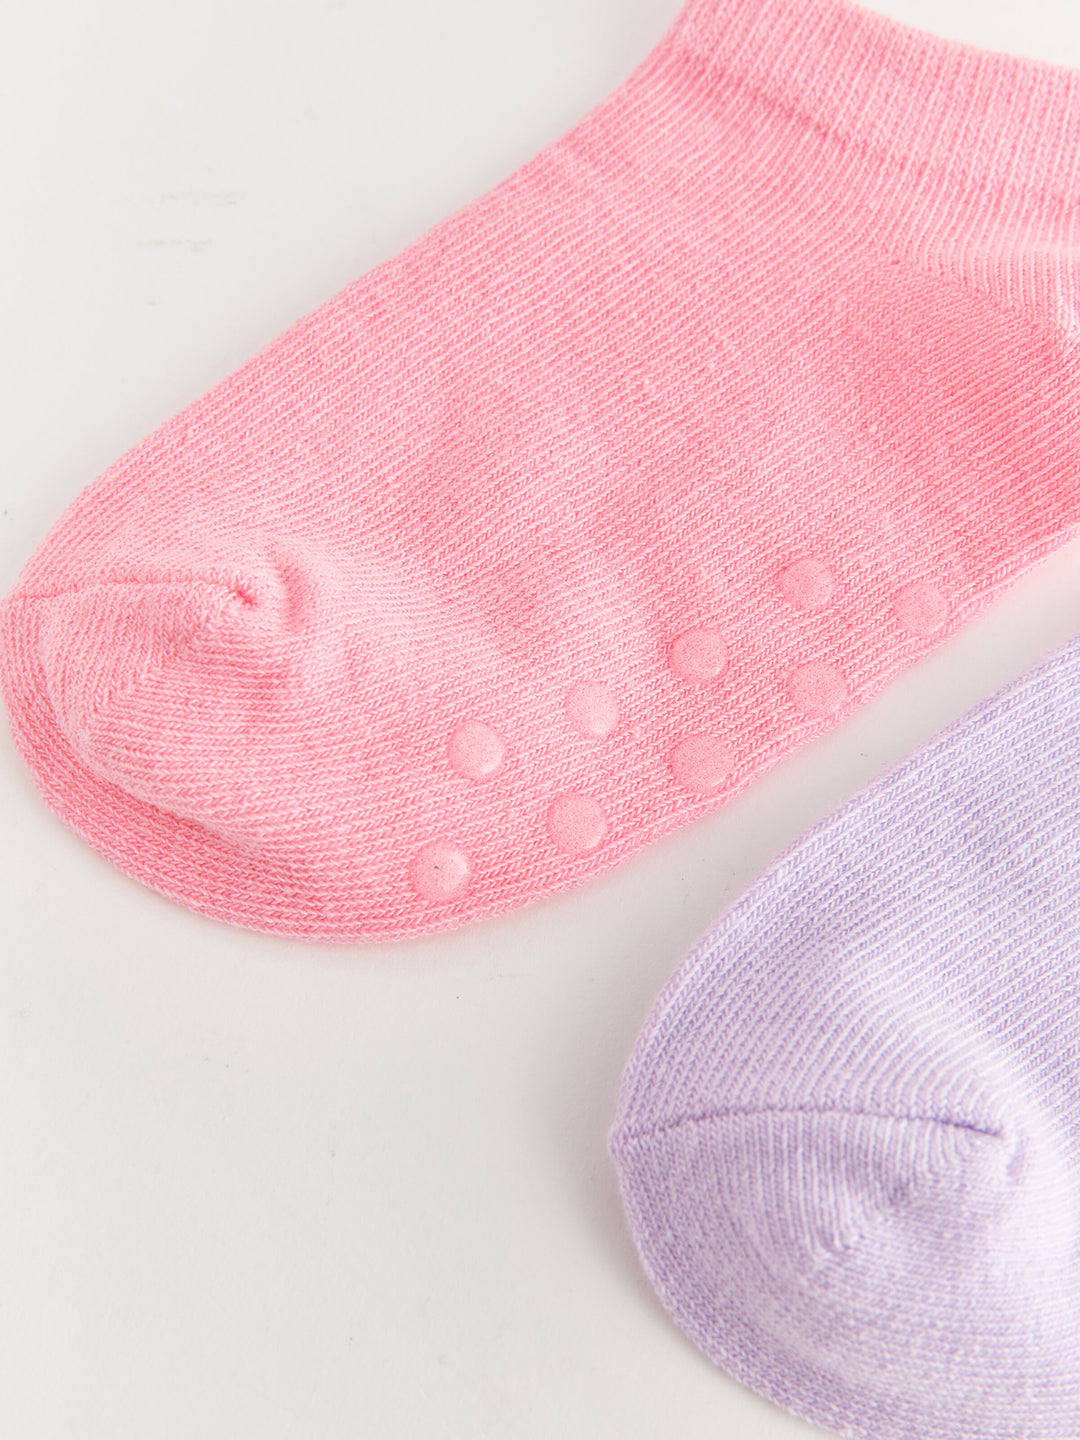 Basic Baby Girls Booties Socks 5 Pack